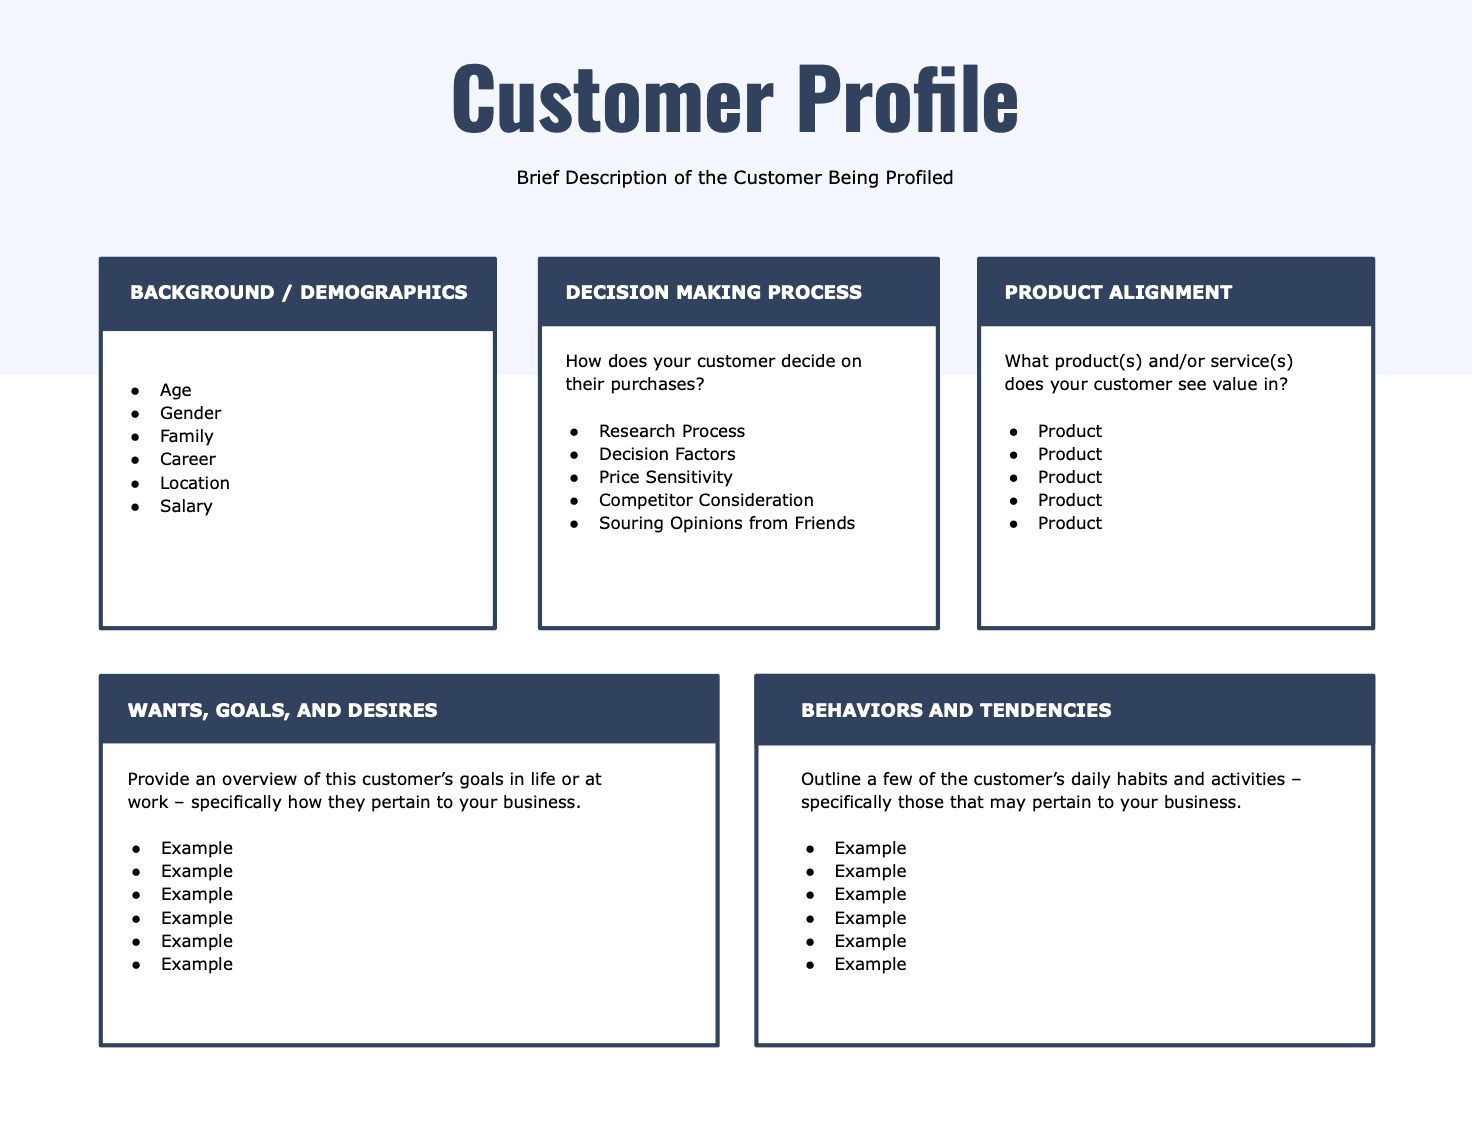 Customer profile example